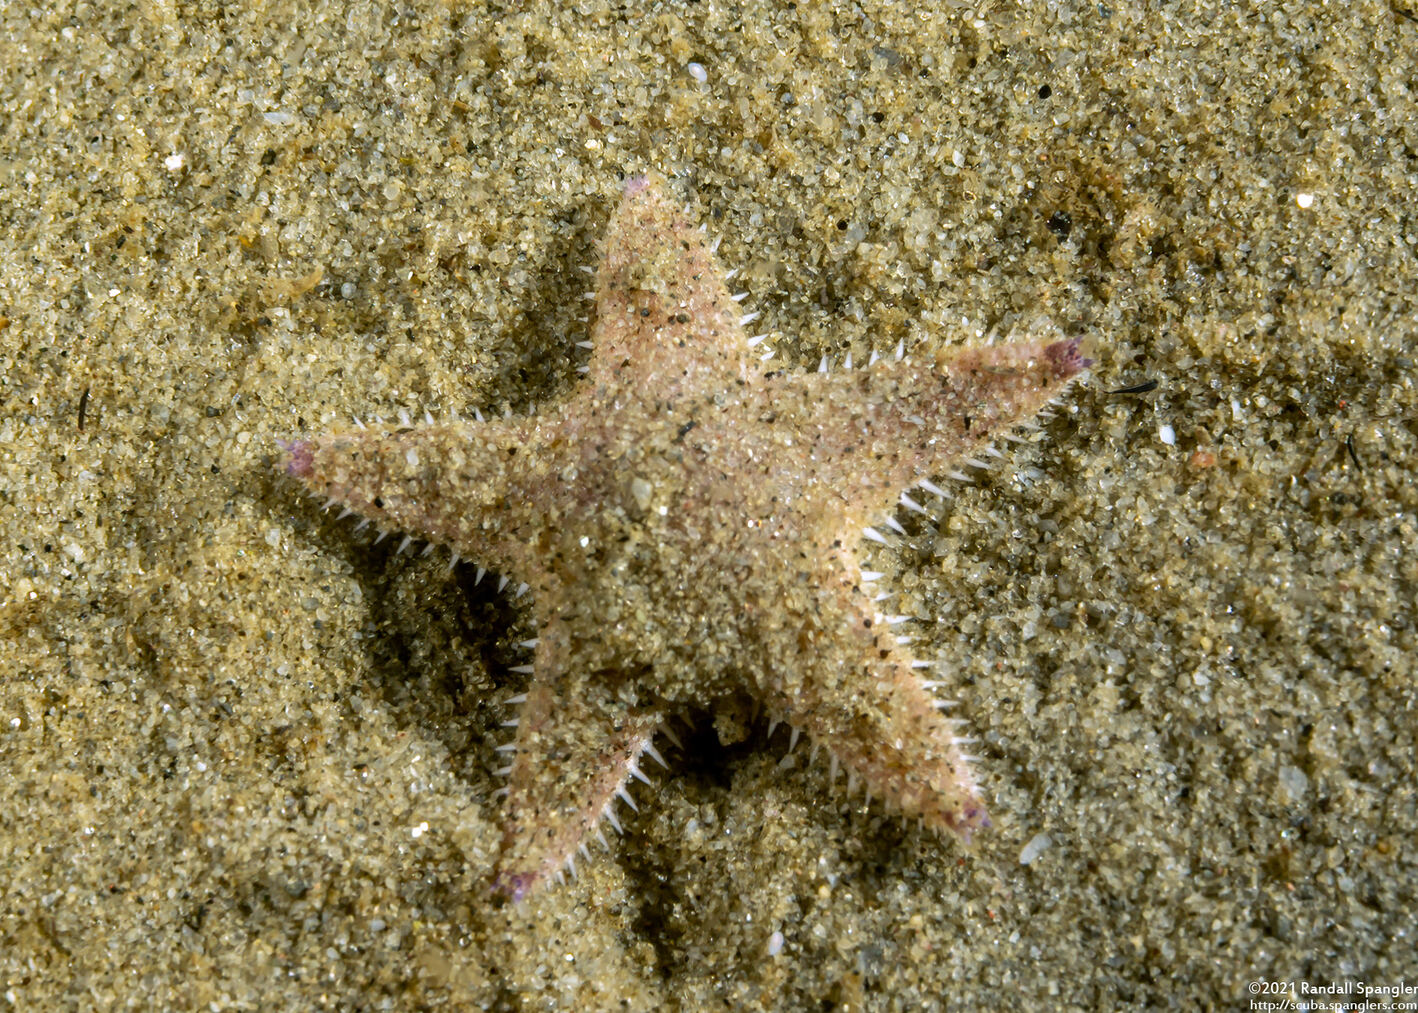 Astropecten armatus (Spiny Sand Star); Tiny juvenile